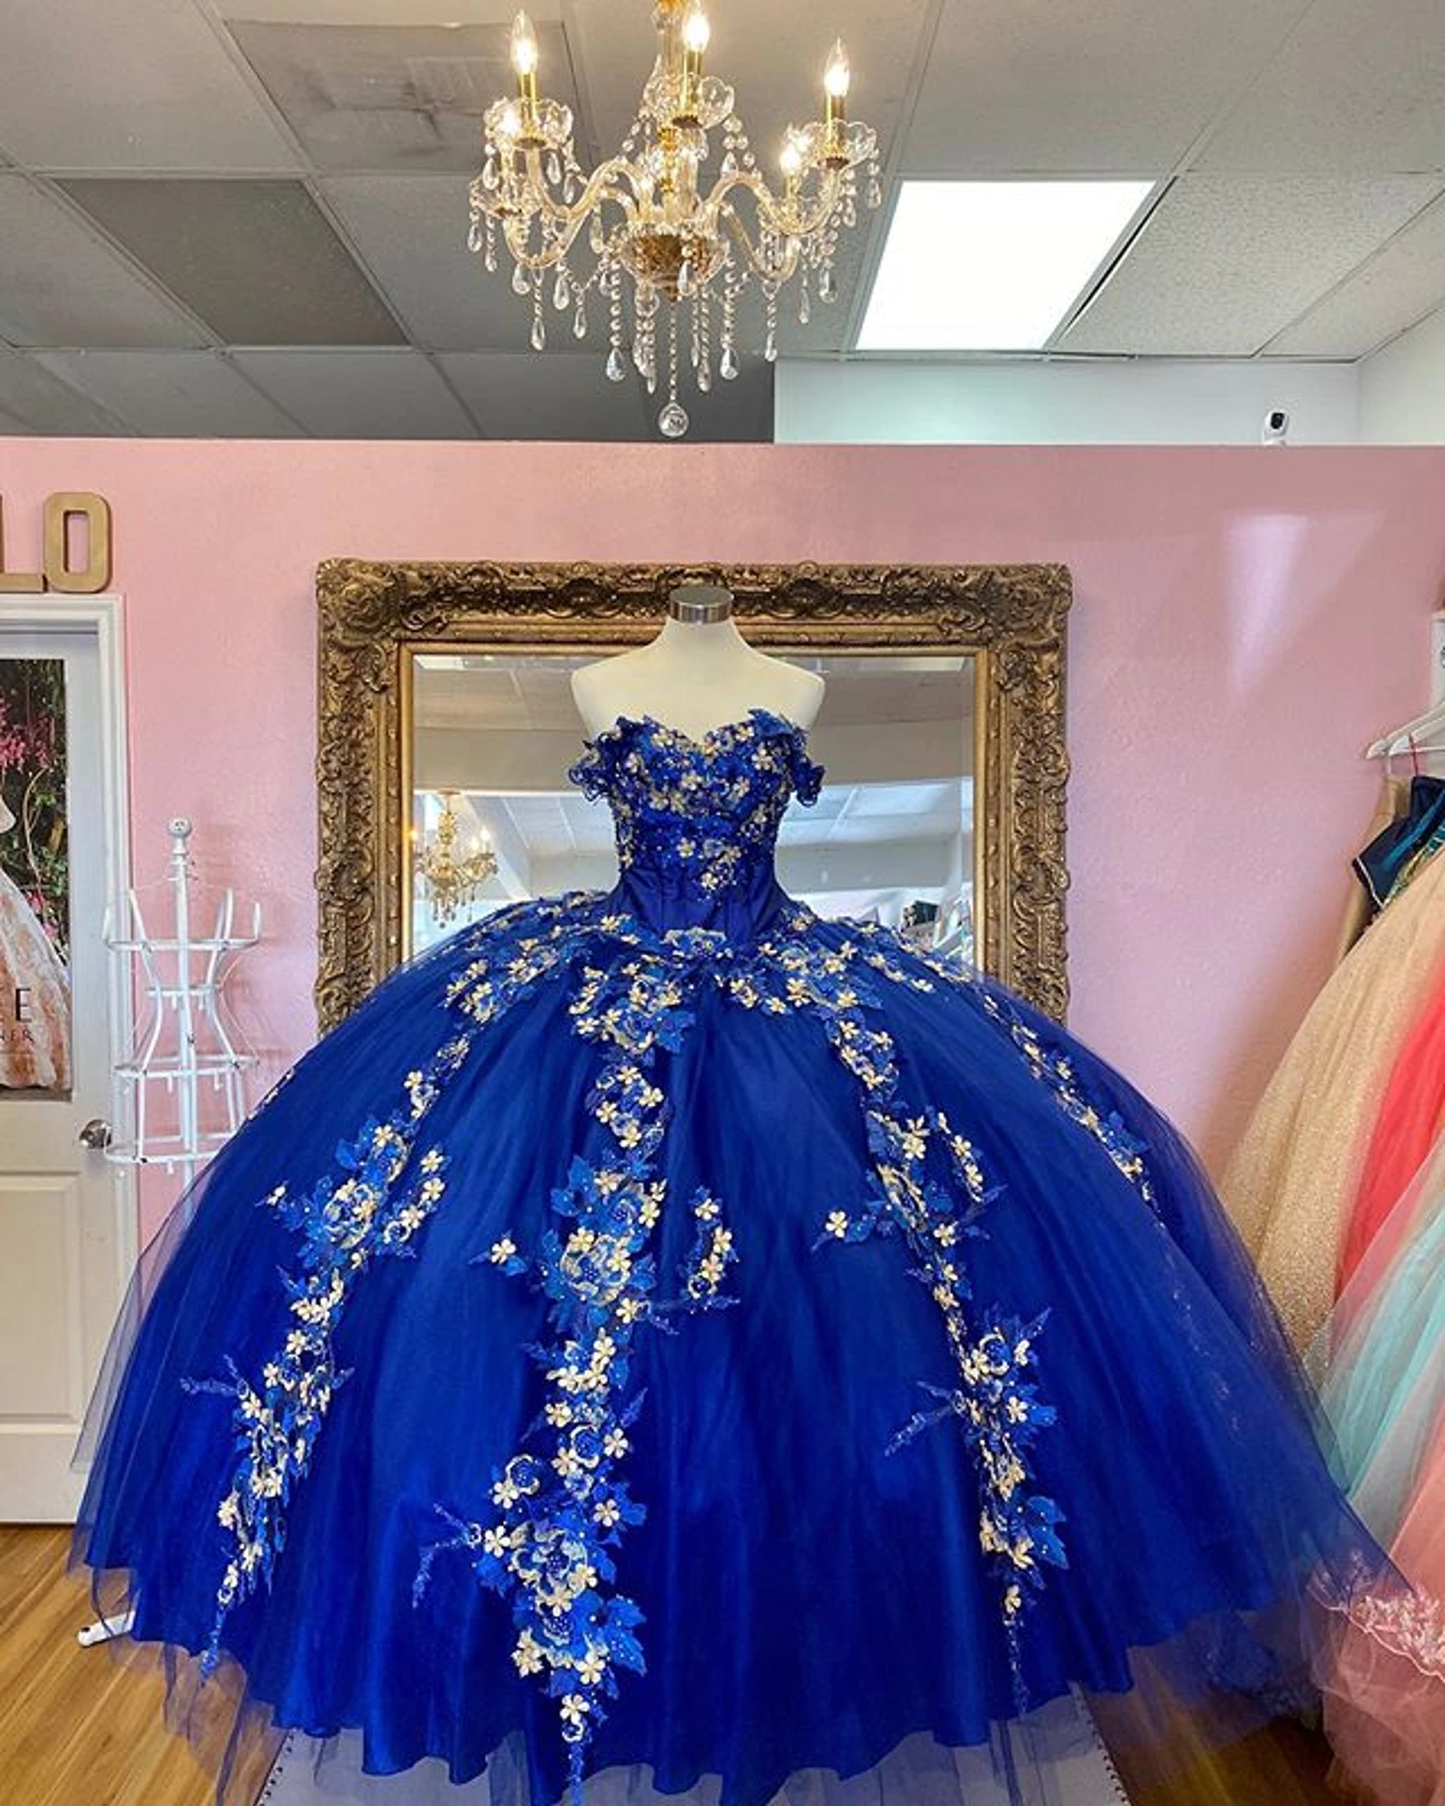 Royal Blue Ball Gown Quinceanera Dresses Off the Shoulder Beaded 3D FLowers Sweet 16 Dress Girls Party Gowns vestidos de quinceañera N1487